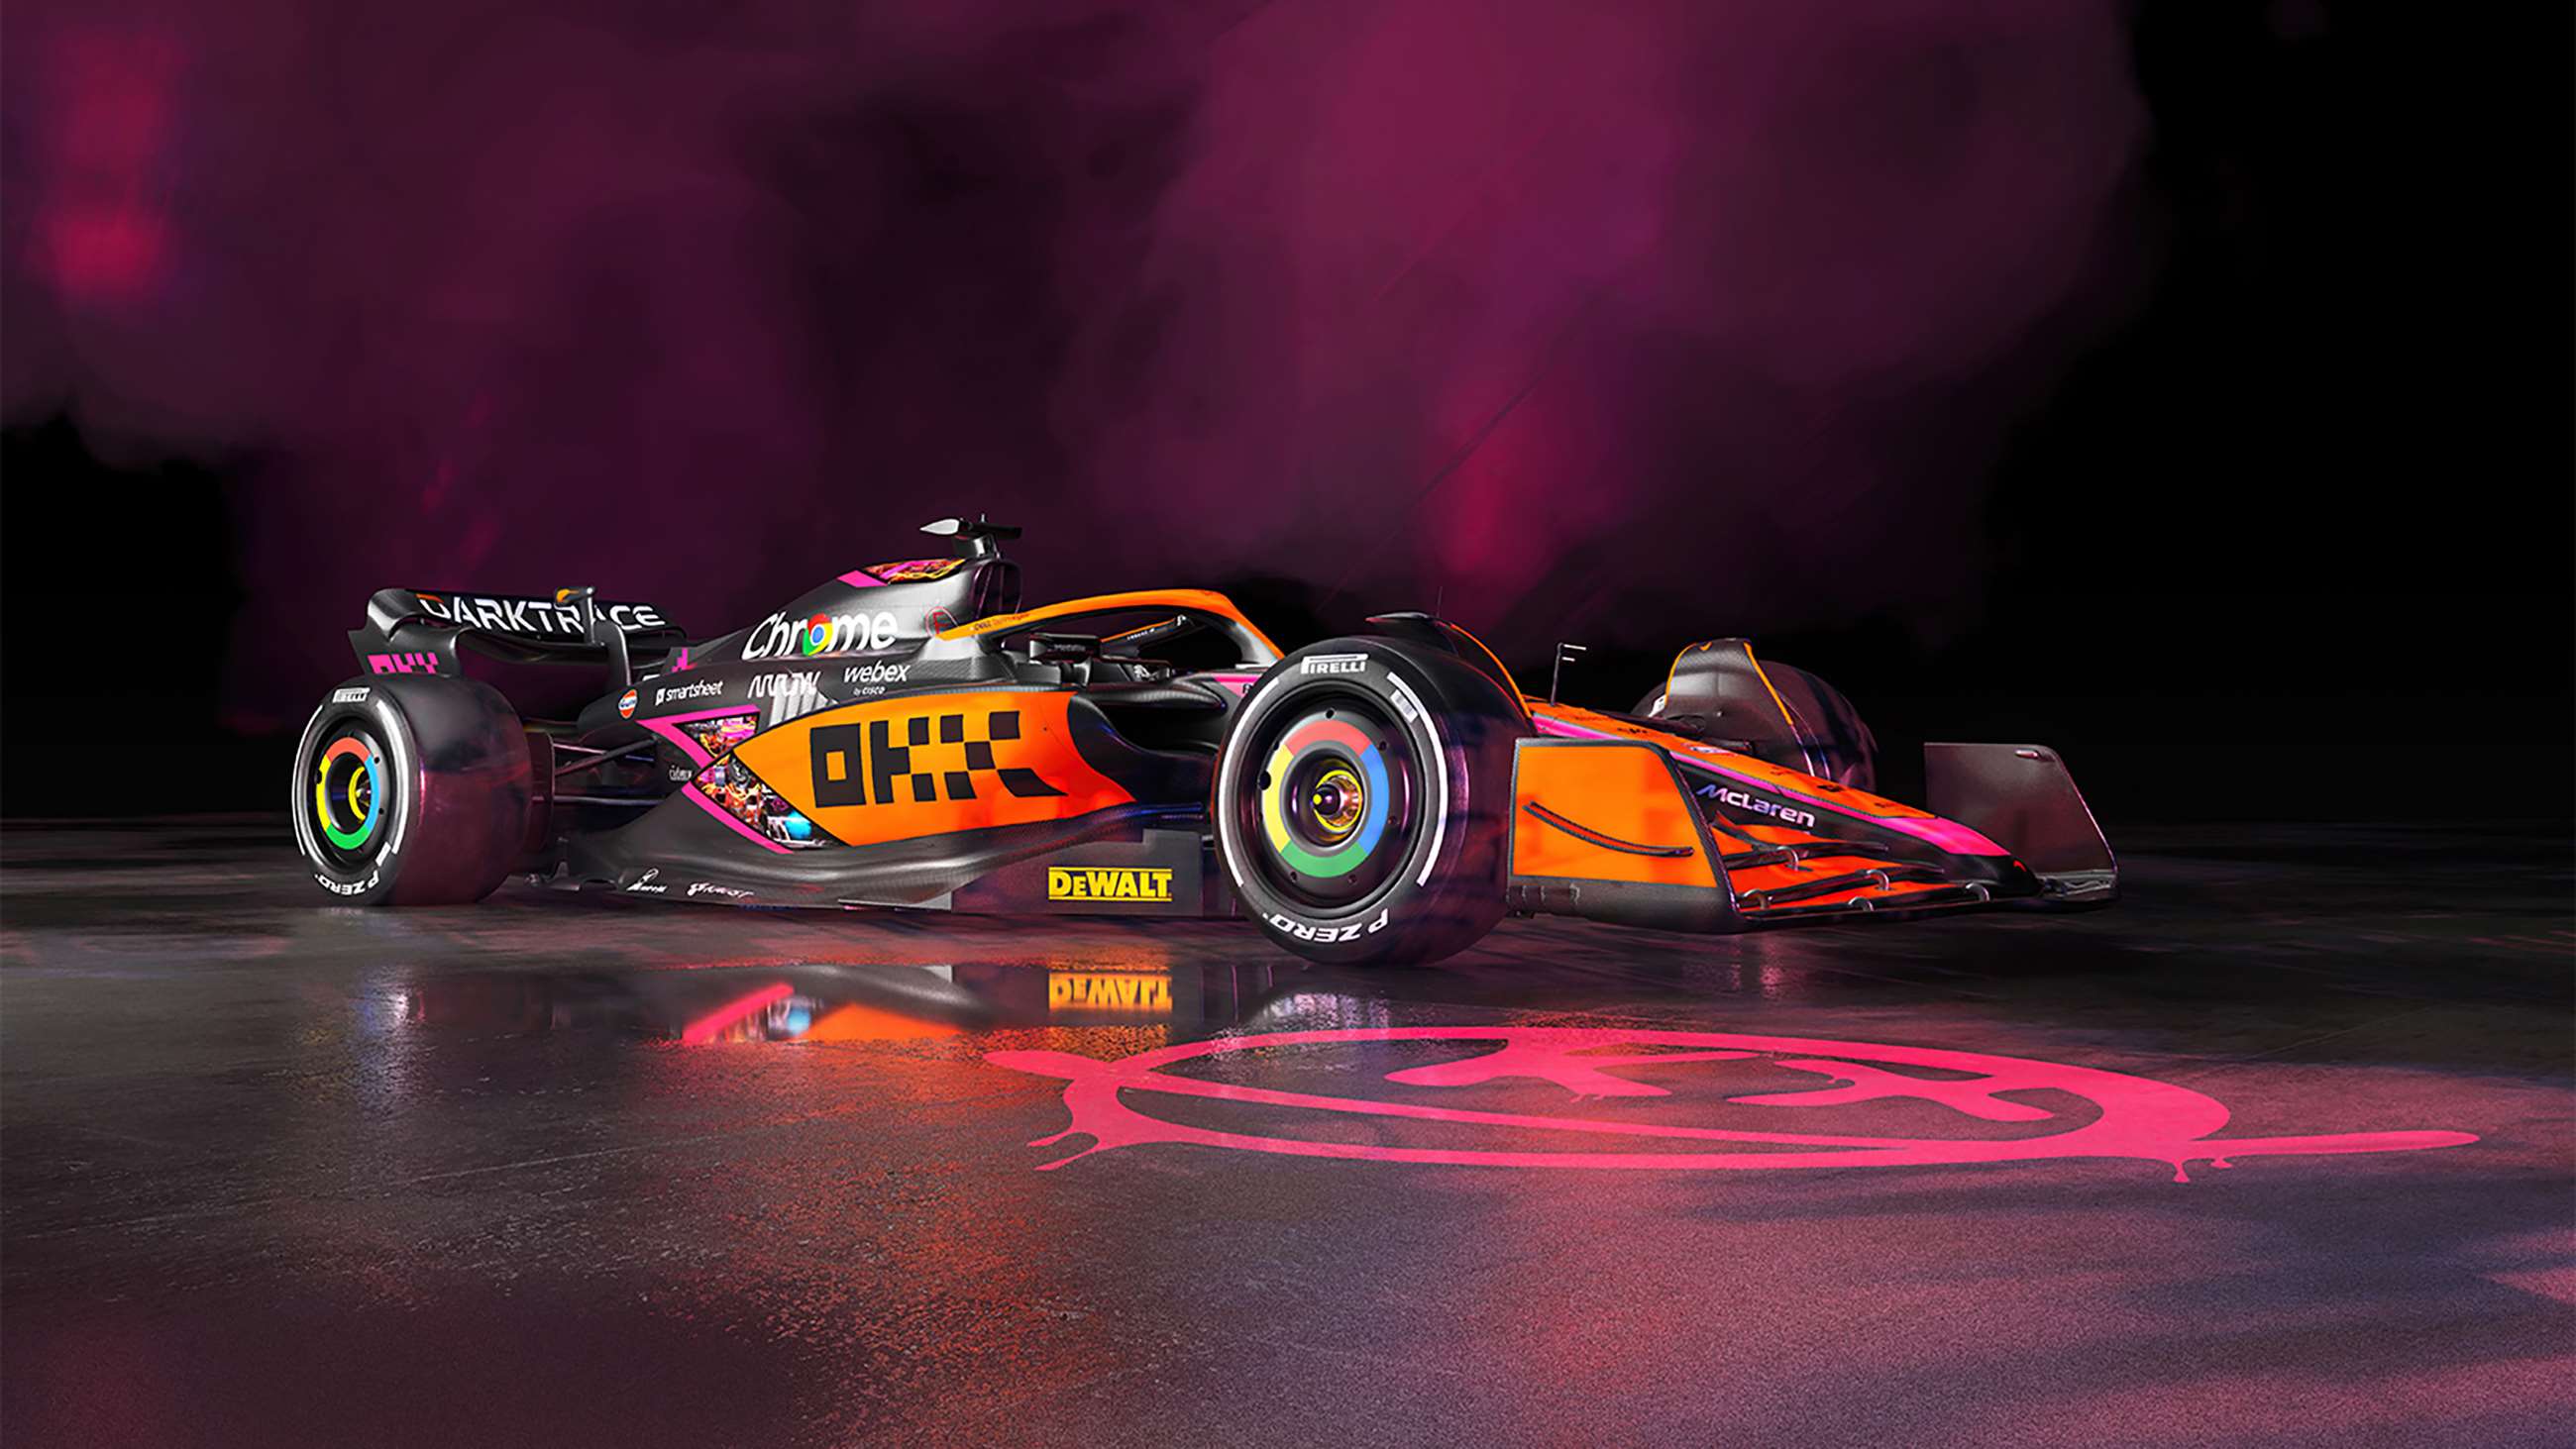 Updated 2022 F1 car liveries McLaren changes it up for Abu Dhabi GRR